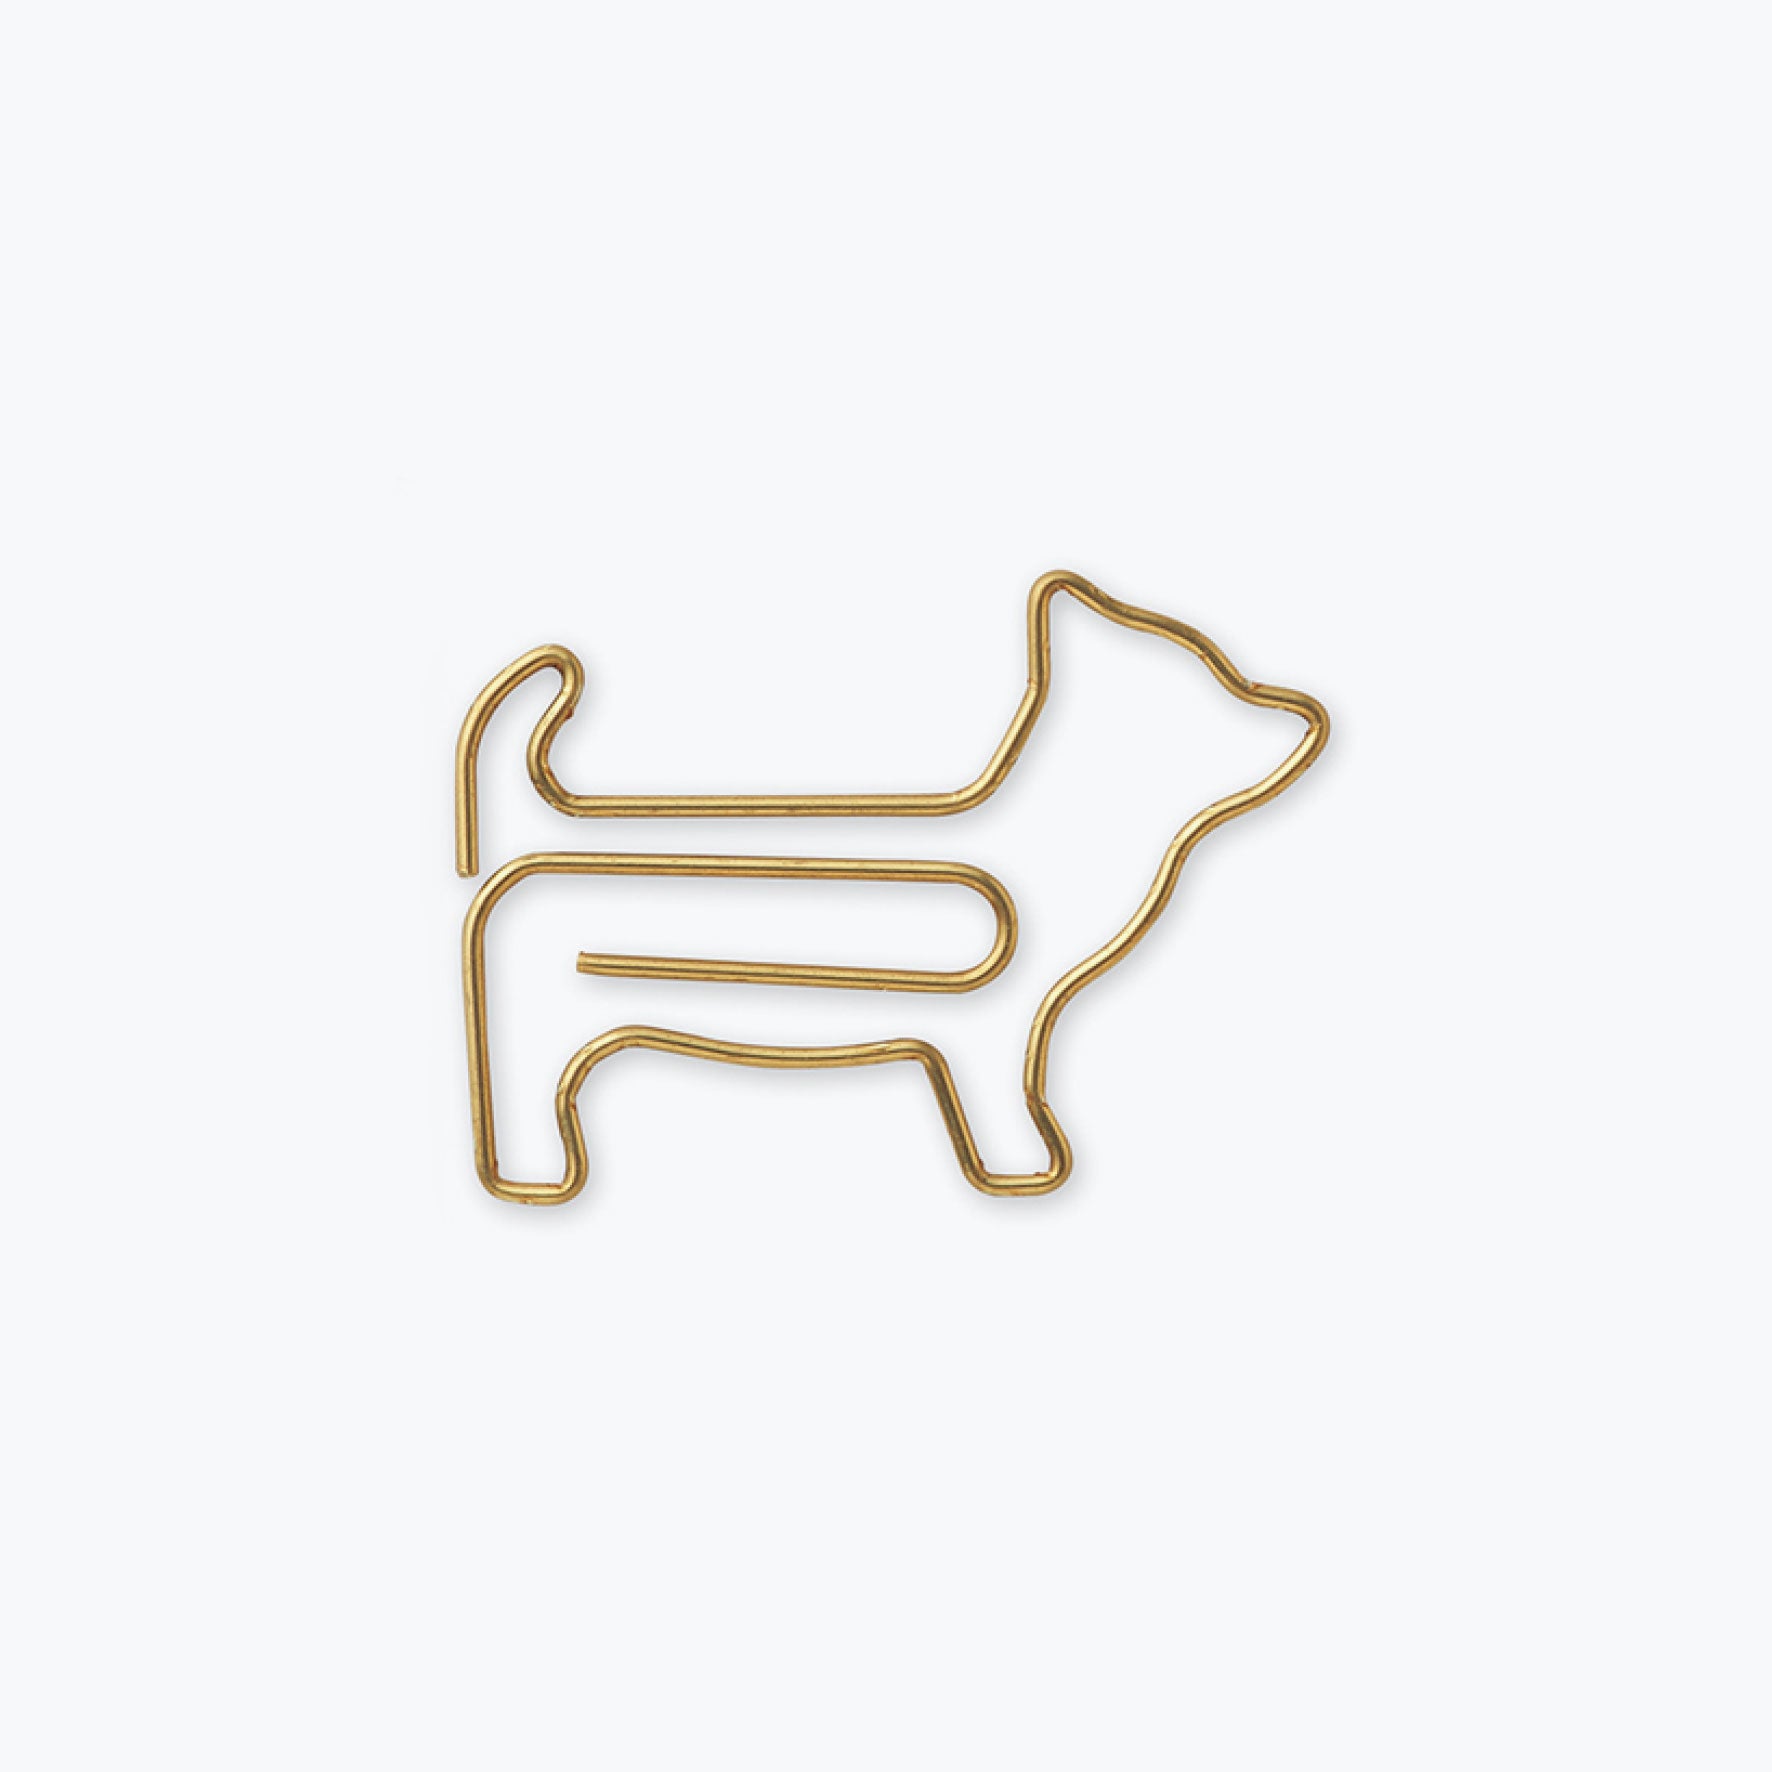 Midori - D-Clips - Dog (Chihuahua) <Outgoing>